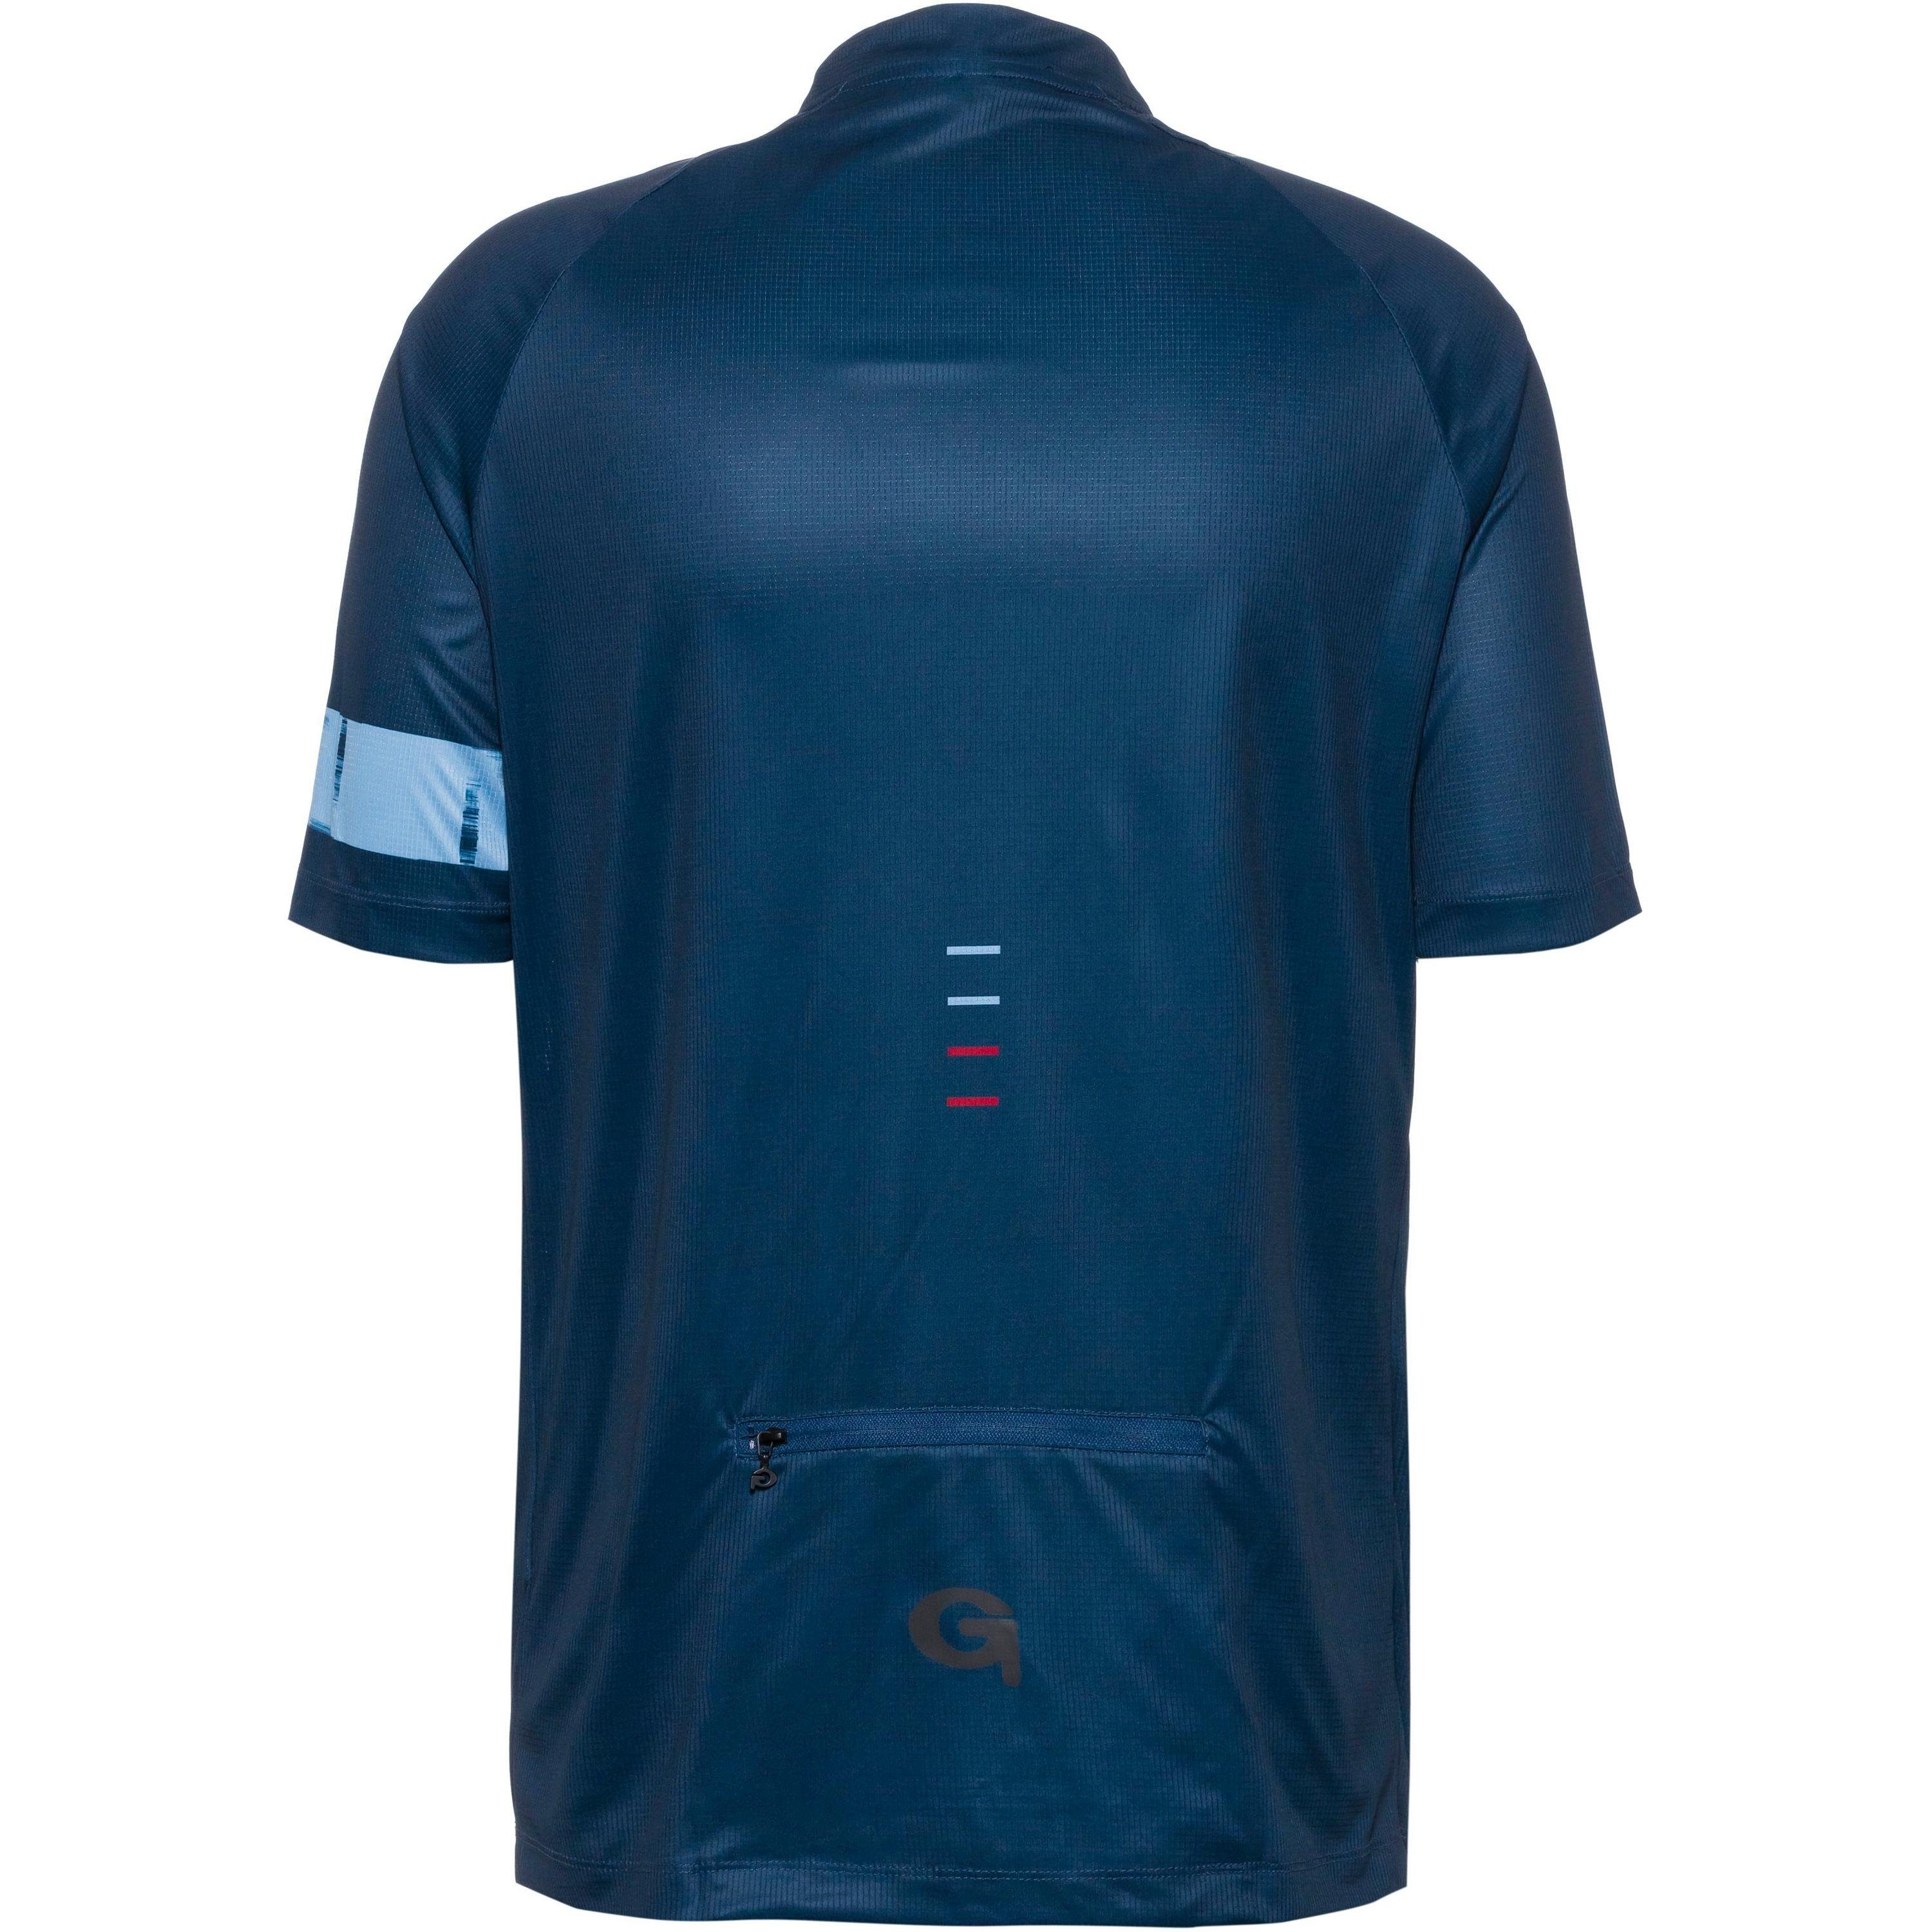 Gonso Avisio Funktionsshirt blue insignia